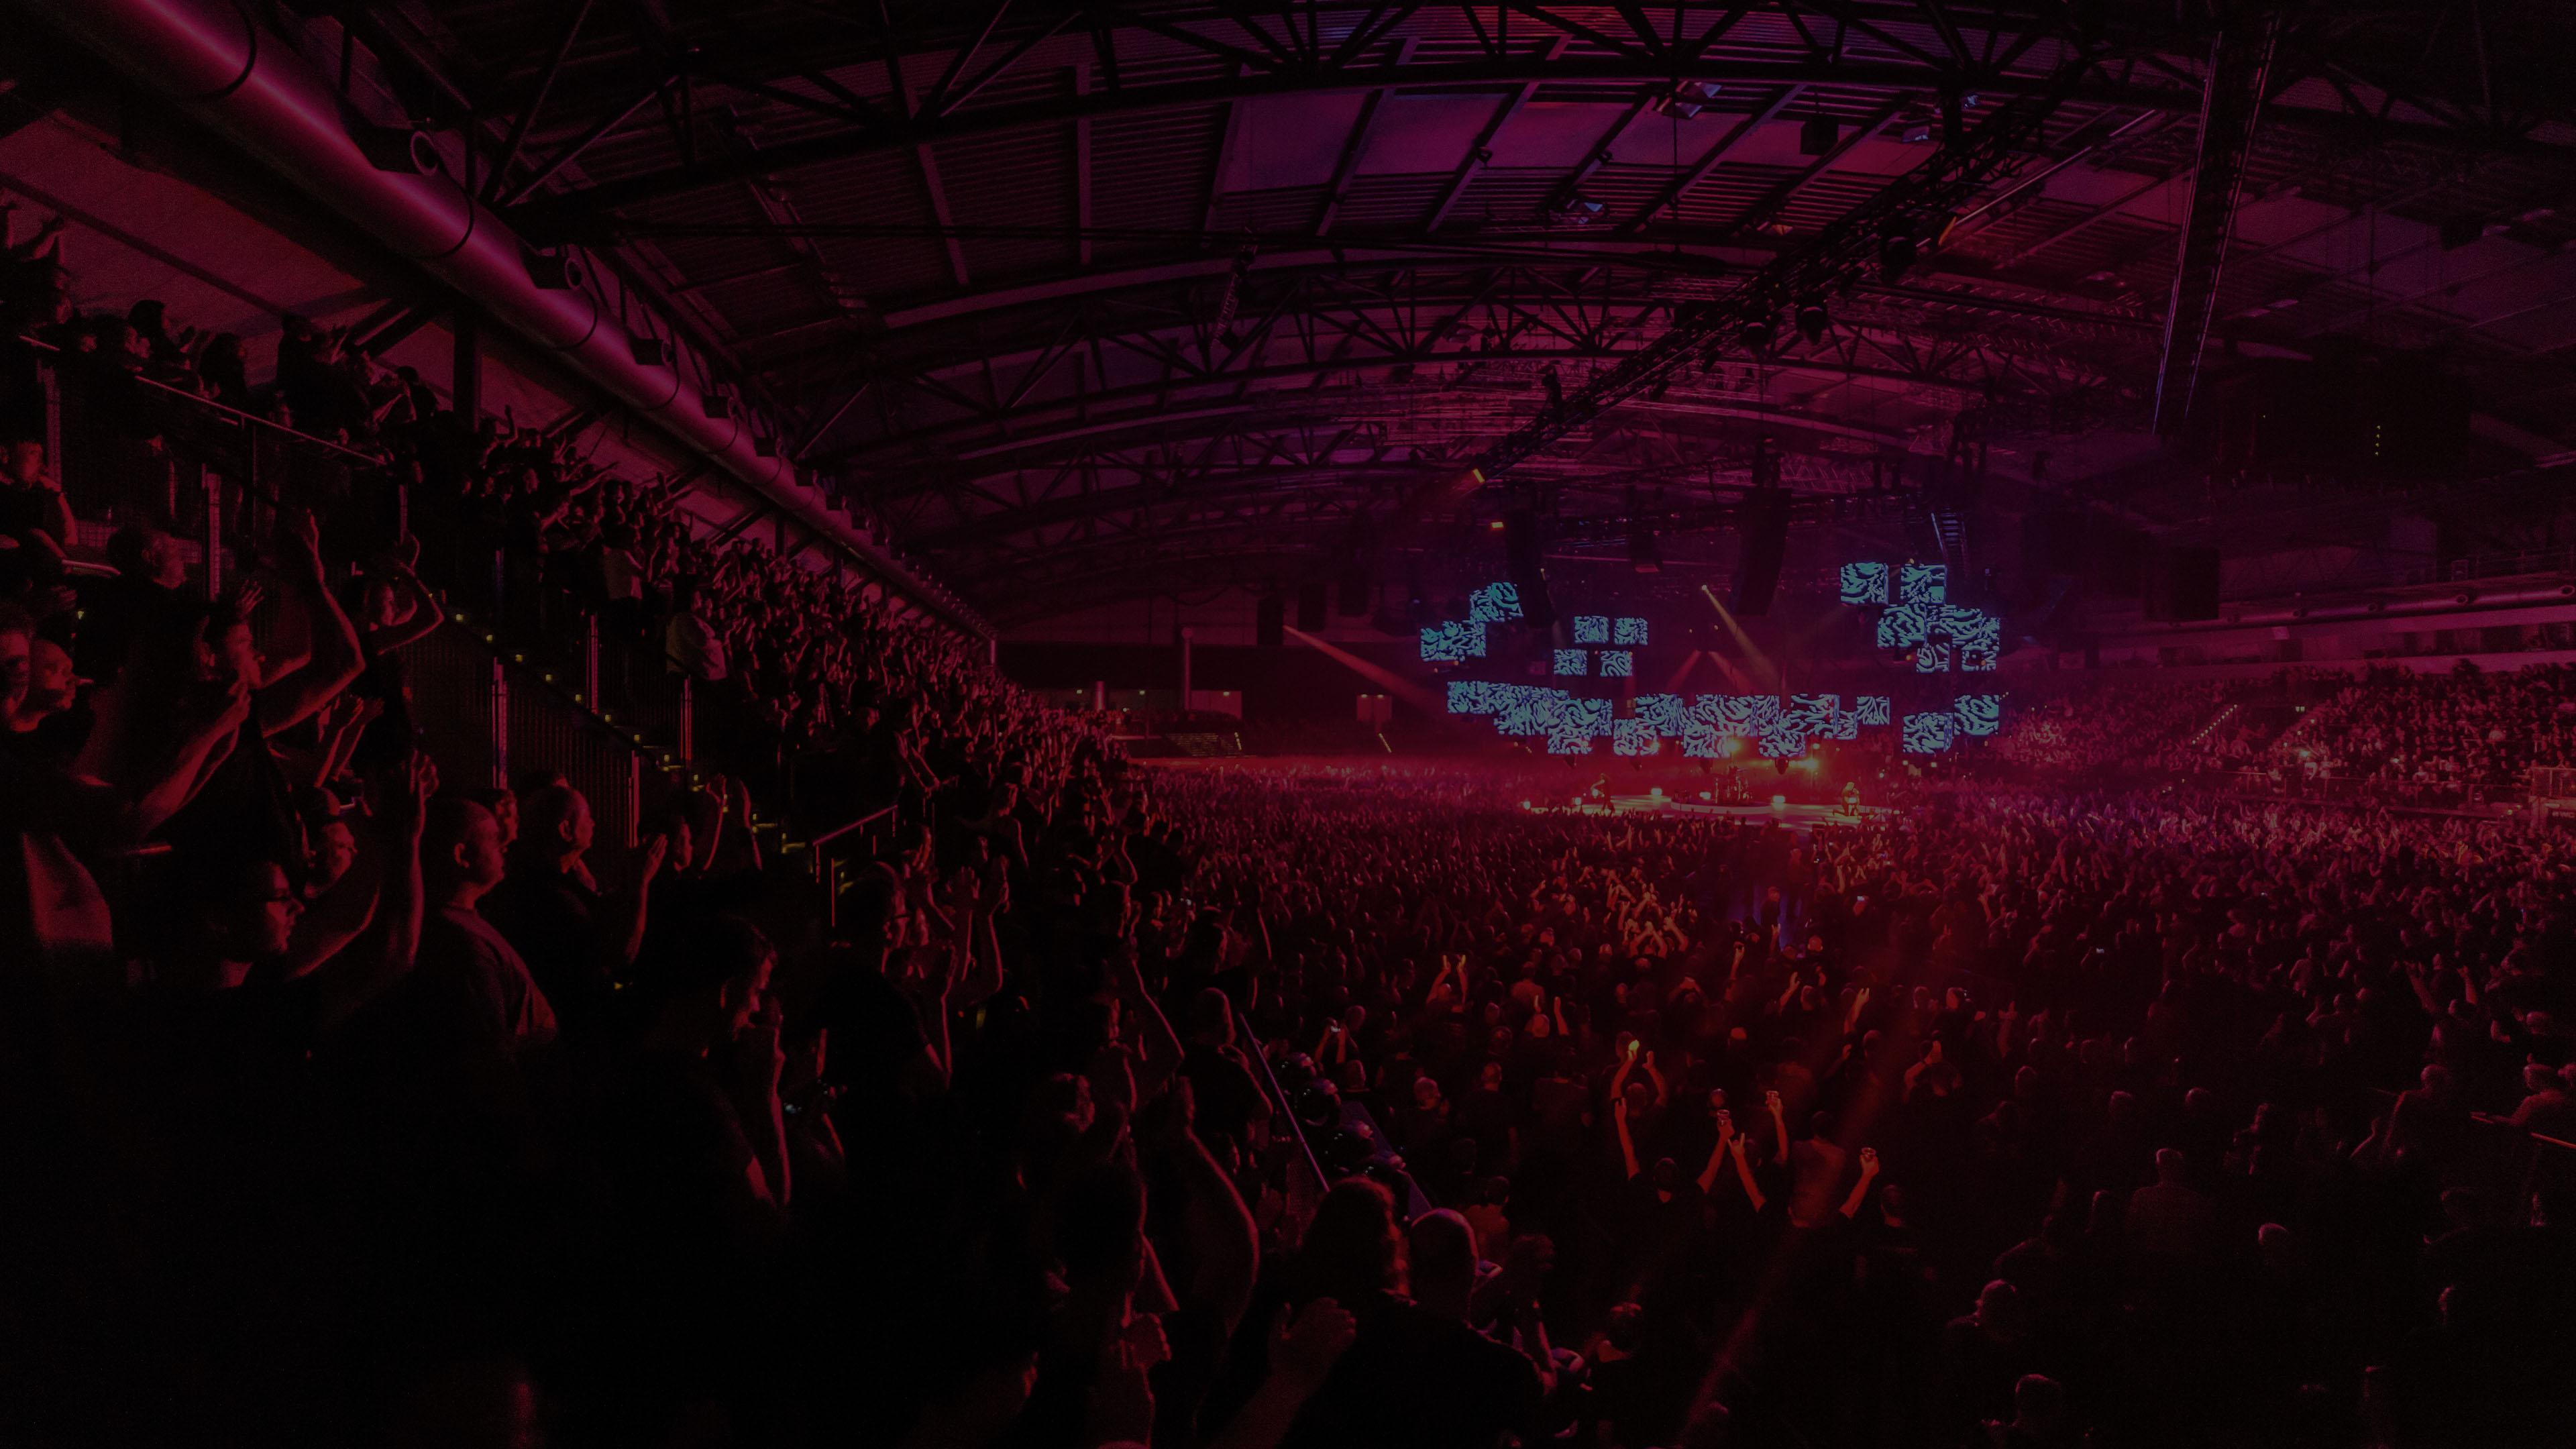 Metallica at Arena Leipzig in Leipzig, Germany on April 30, 2018